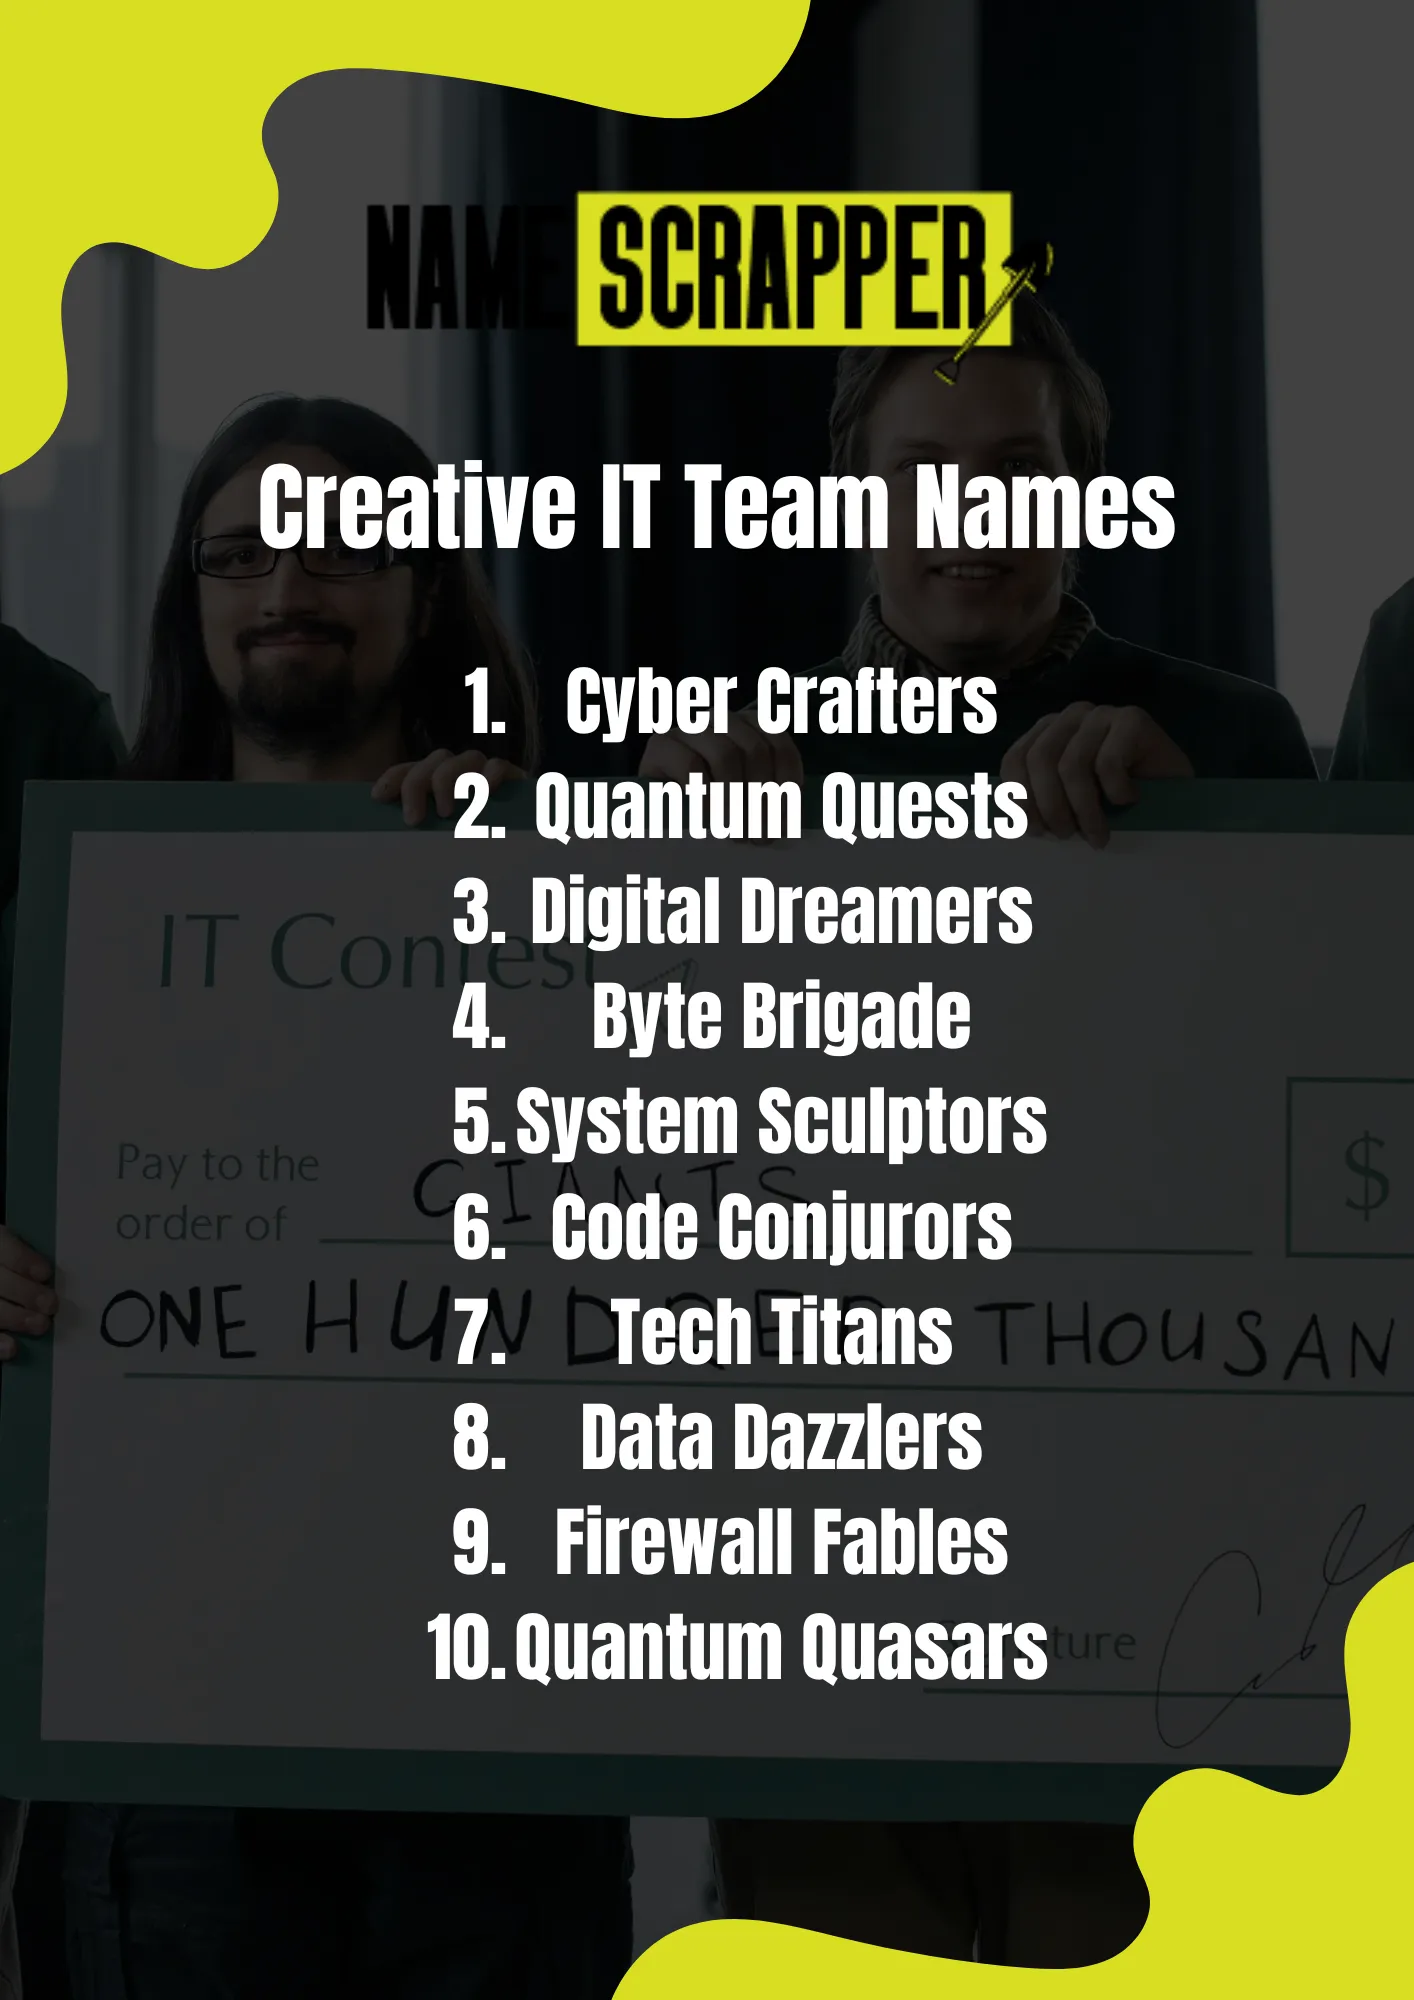 Creative IT Team Names